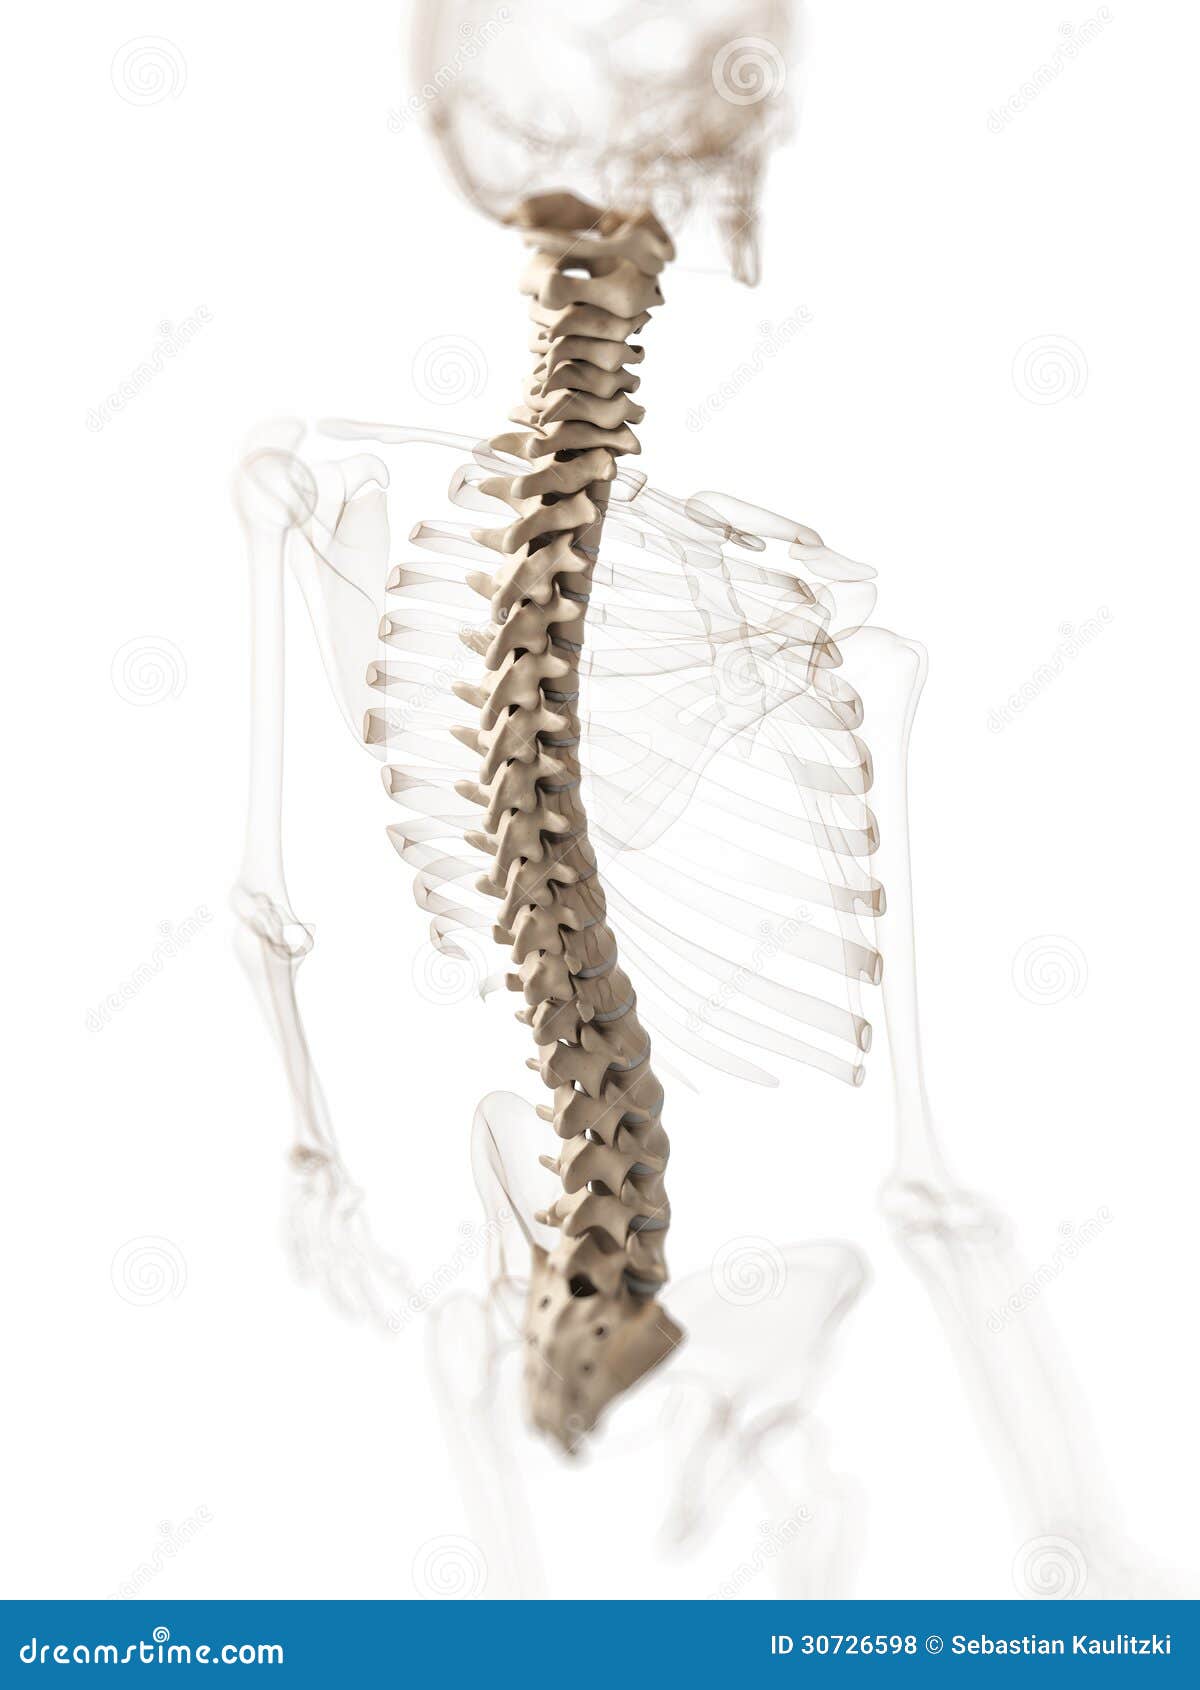 Human Skeletal Spine Royalty Free Stock Photos - Image: 30726598